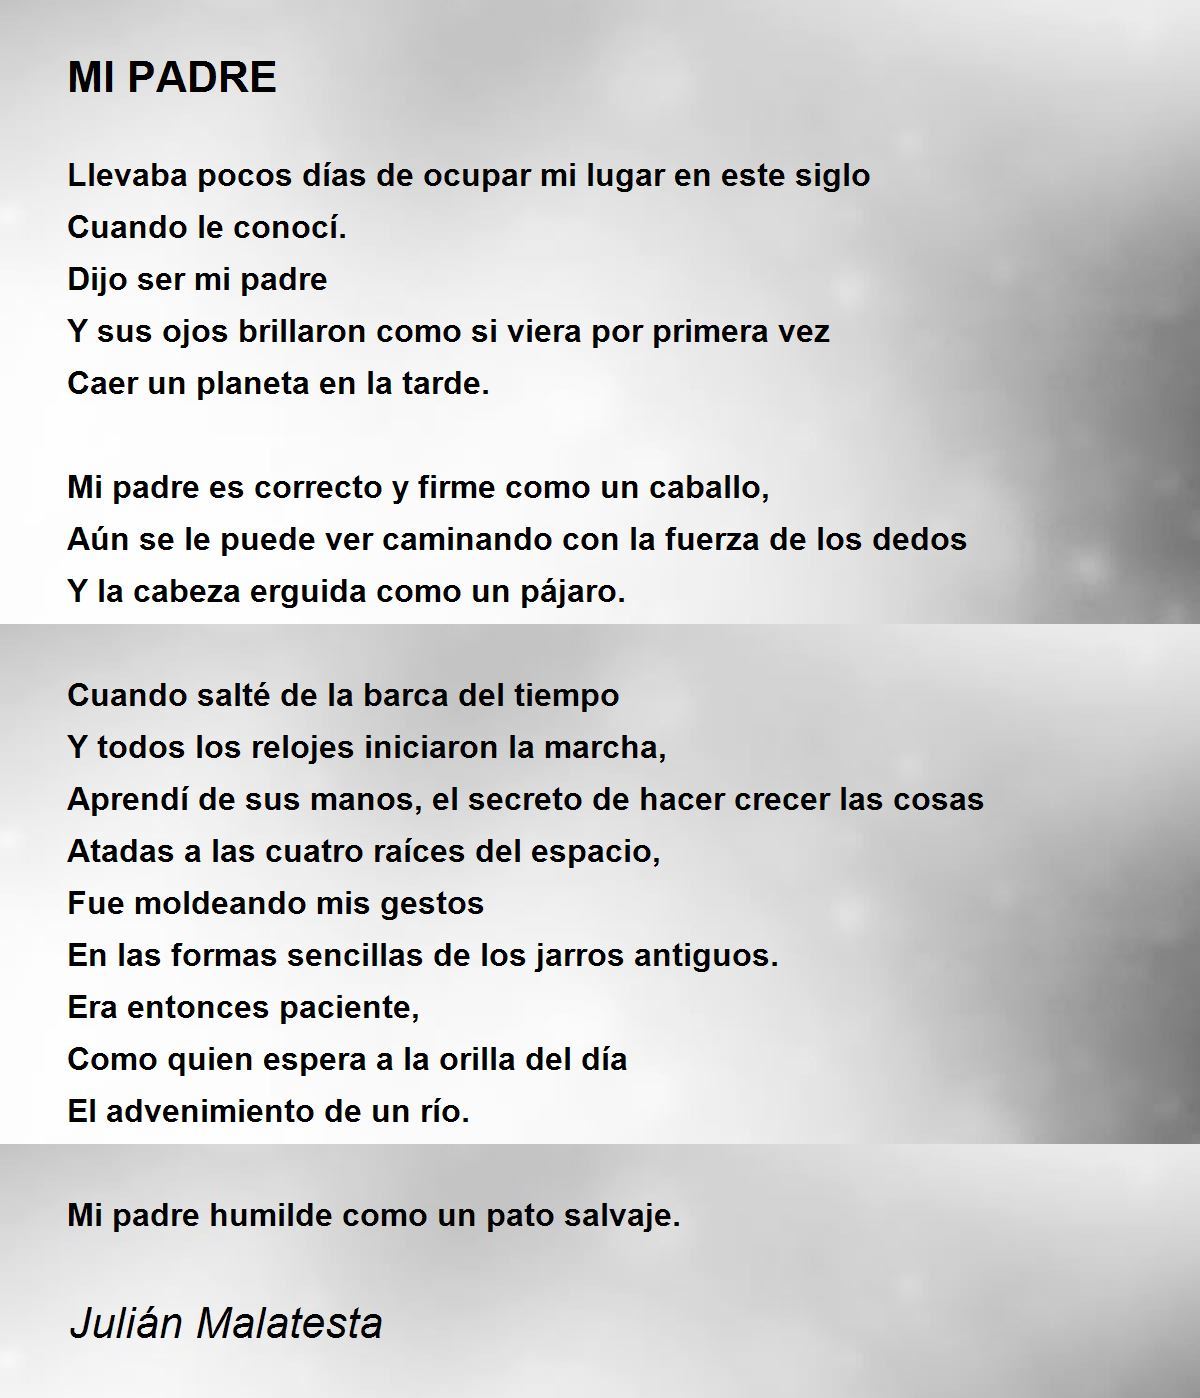 MI PADRE - MI PADRE Poem by Julián Malatesta